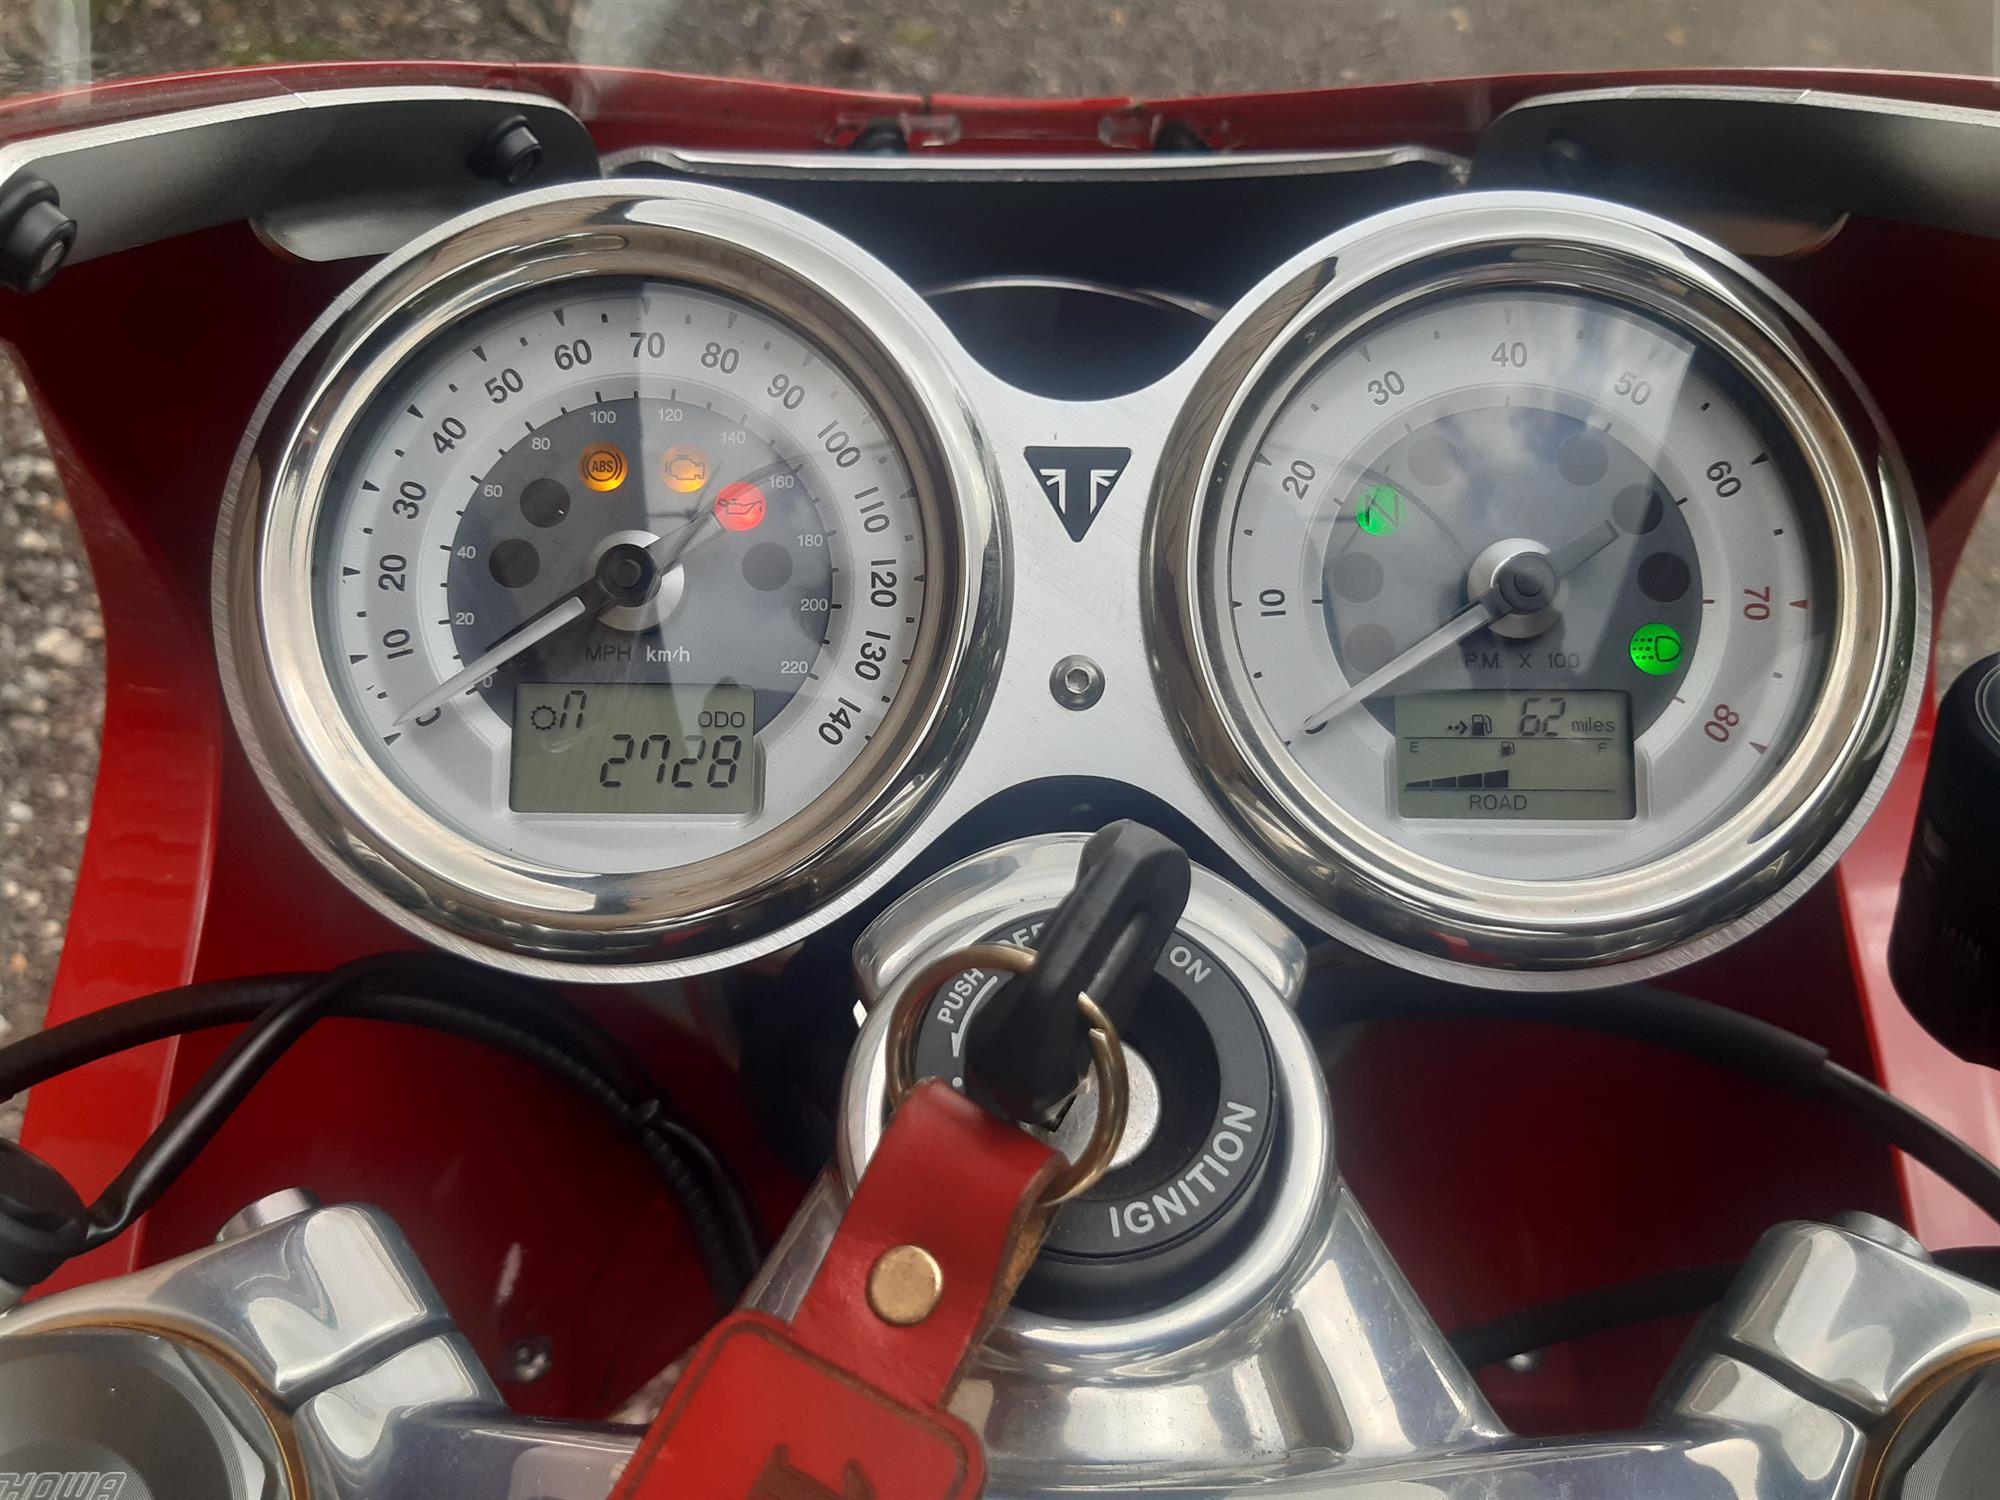 2016 Triumph Thruxton 1200 R 1,200cc - Image 2 of 10